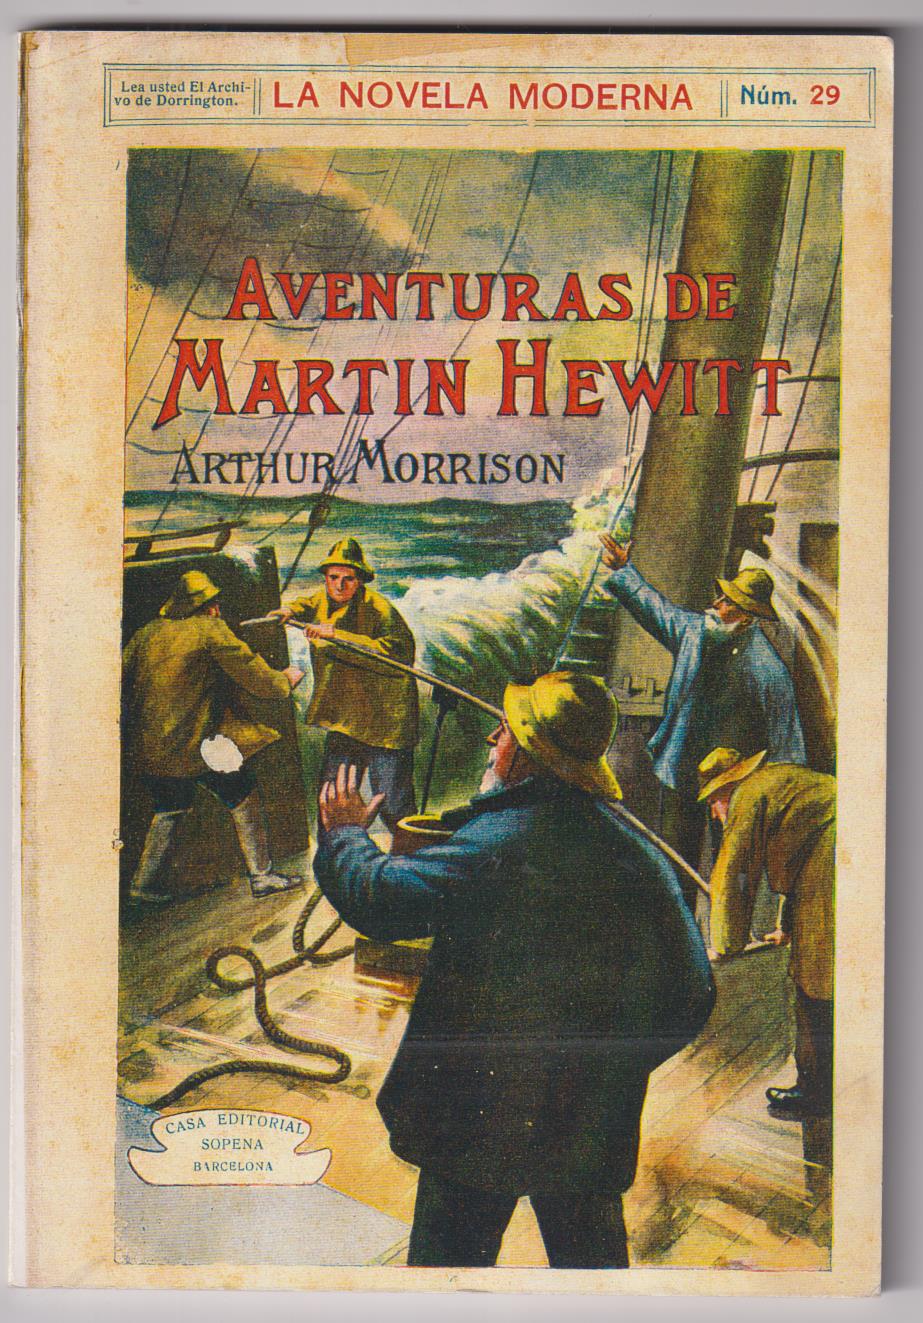 La Novela Moderna nº 29. Arthur Morrison. Aventuras de Martin Hewitt. Fotocopiado